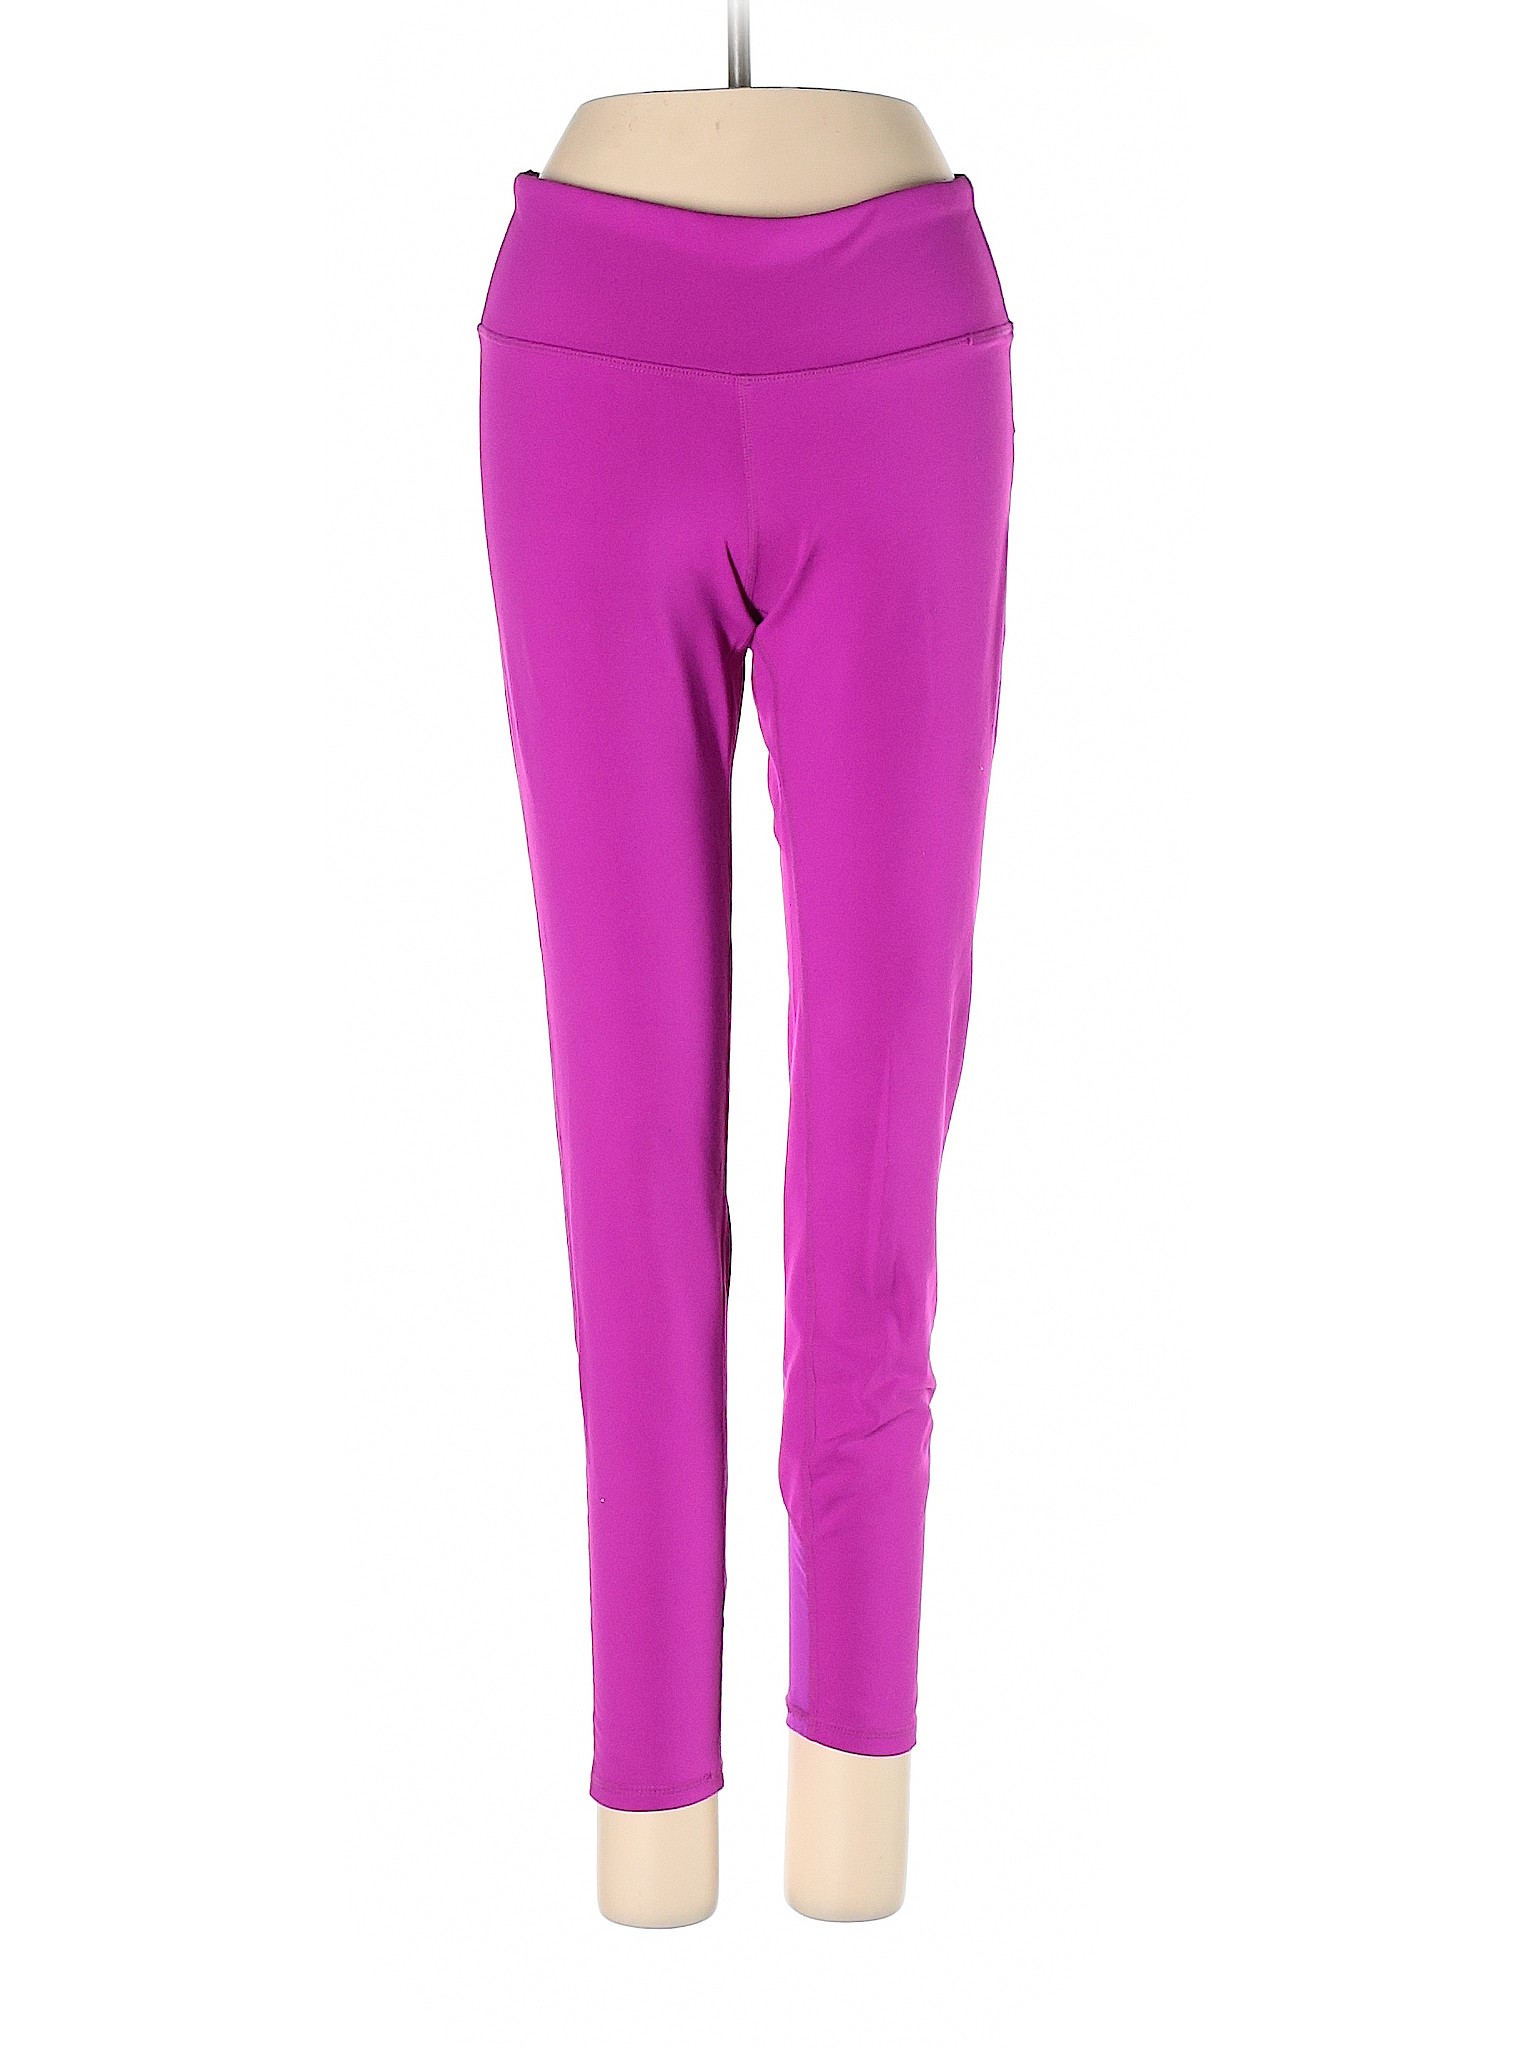 Gap Fit Women Purple Active Pants XS | eBay